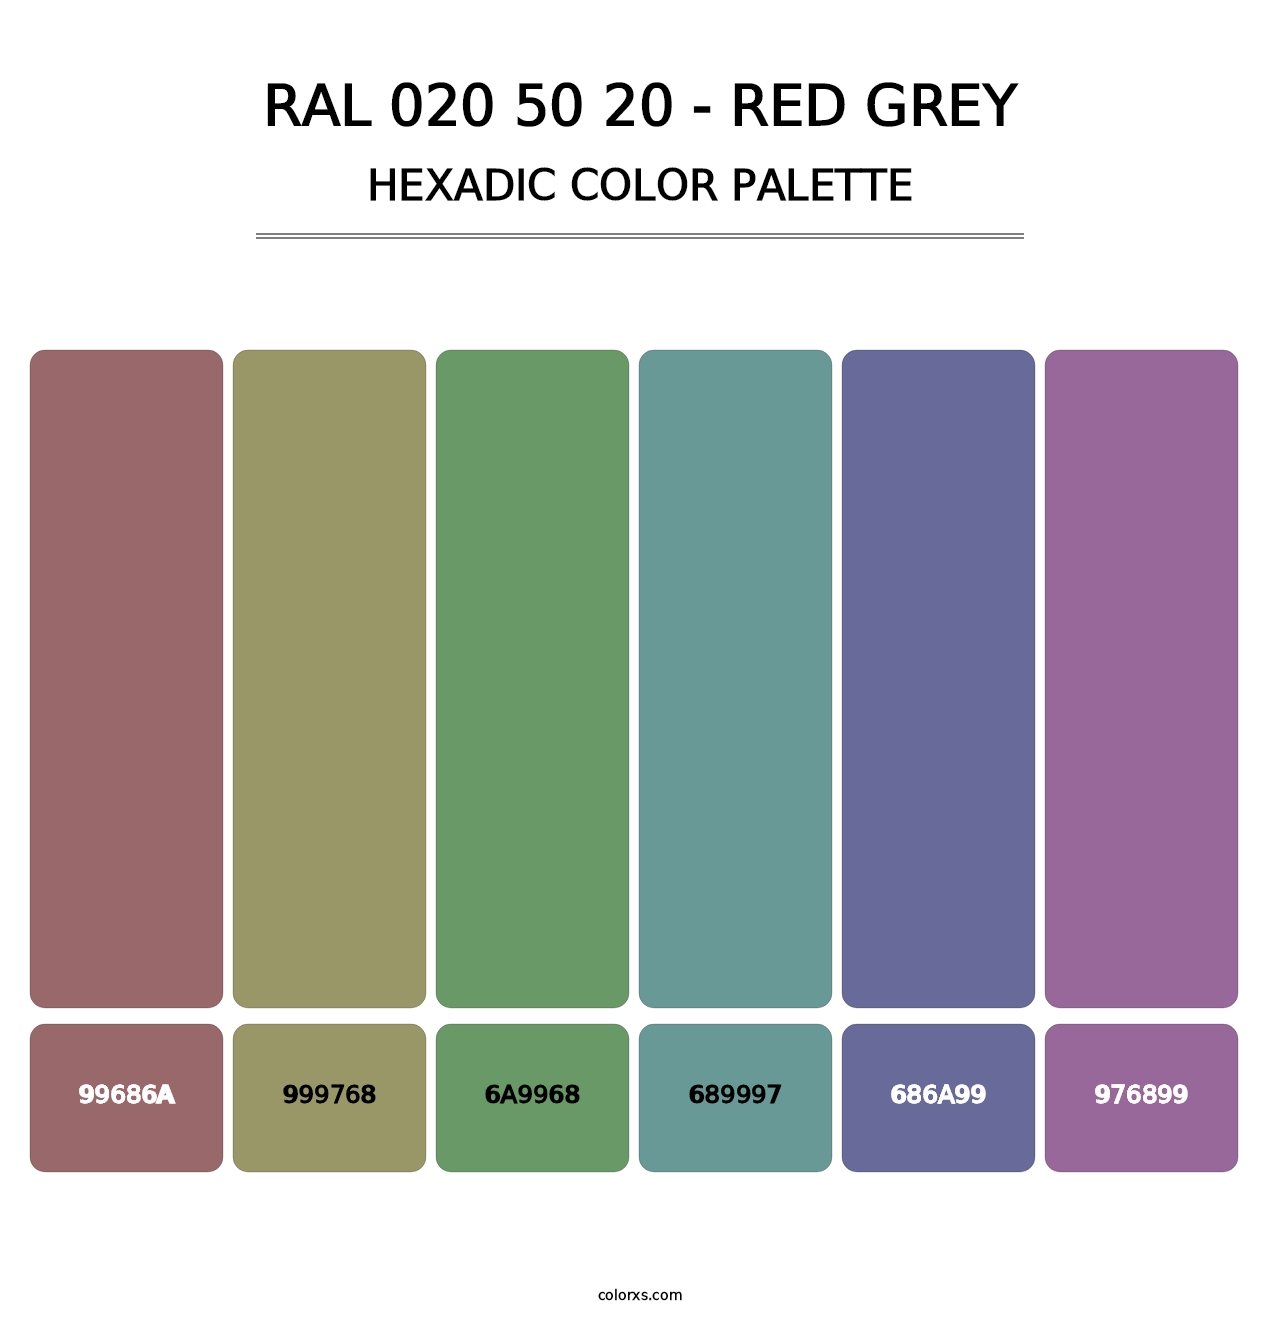 RAL 020 50 20 - Red Grey - Hexadic Color Palette